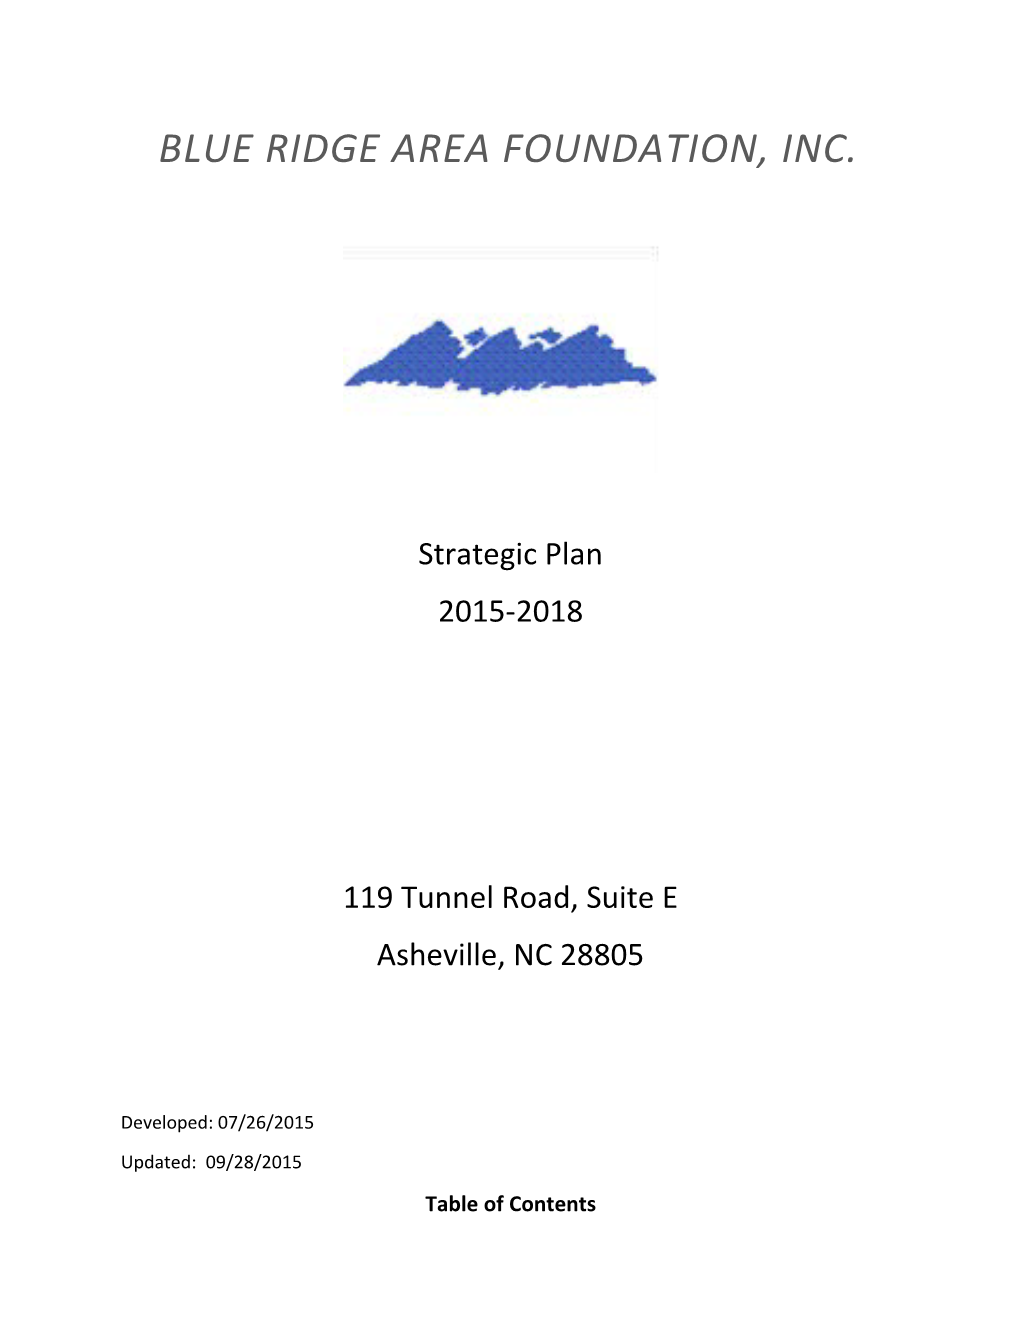 Blue Ridge Area Foundation, Inc